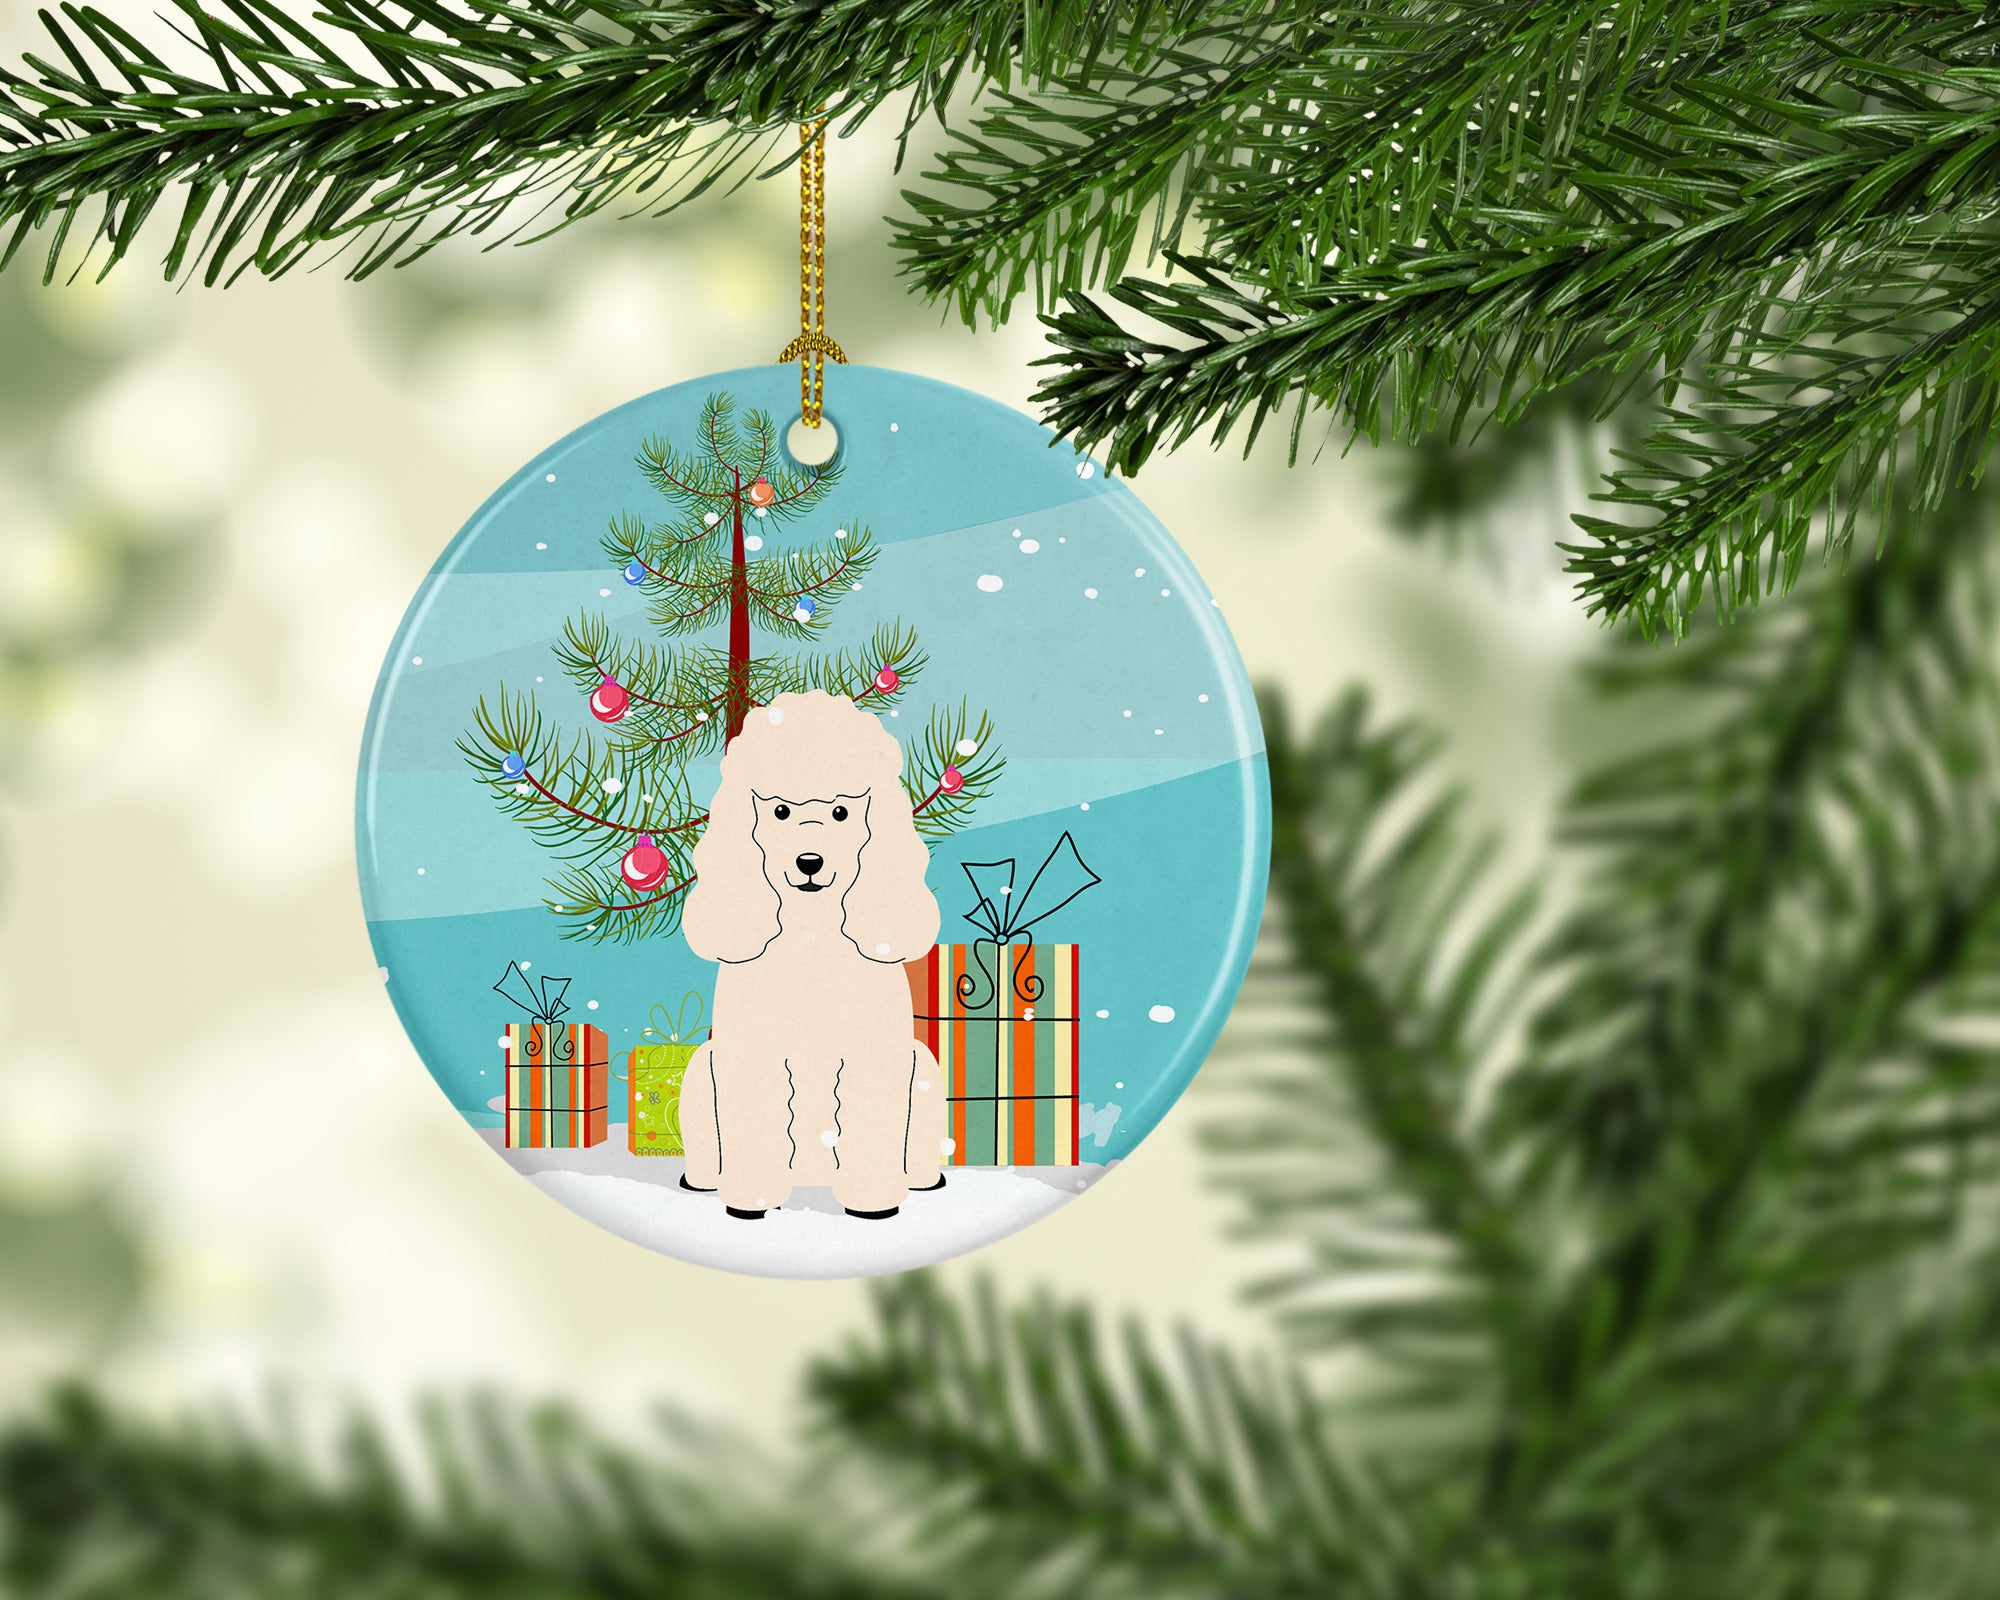 Merry Christmas Tree Poodle White Ceramic Ornament BB4195CO1 - the-store.com